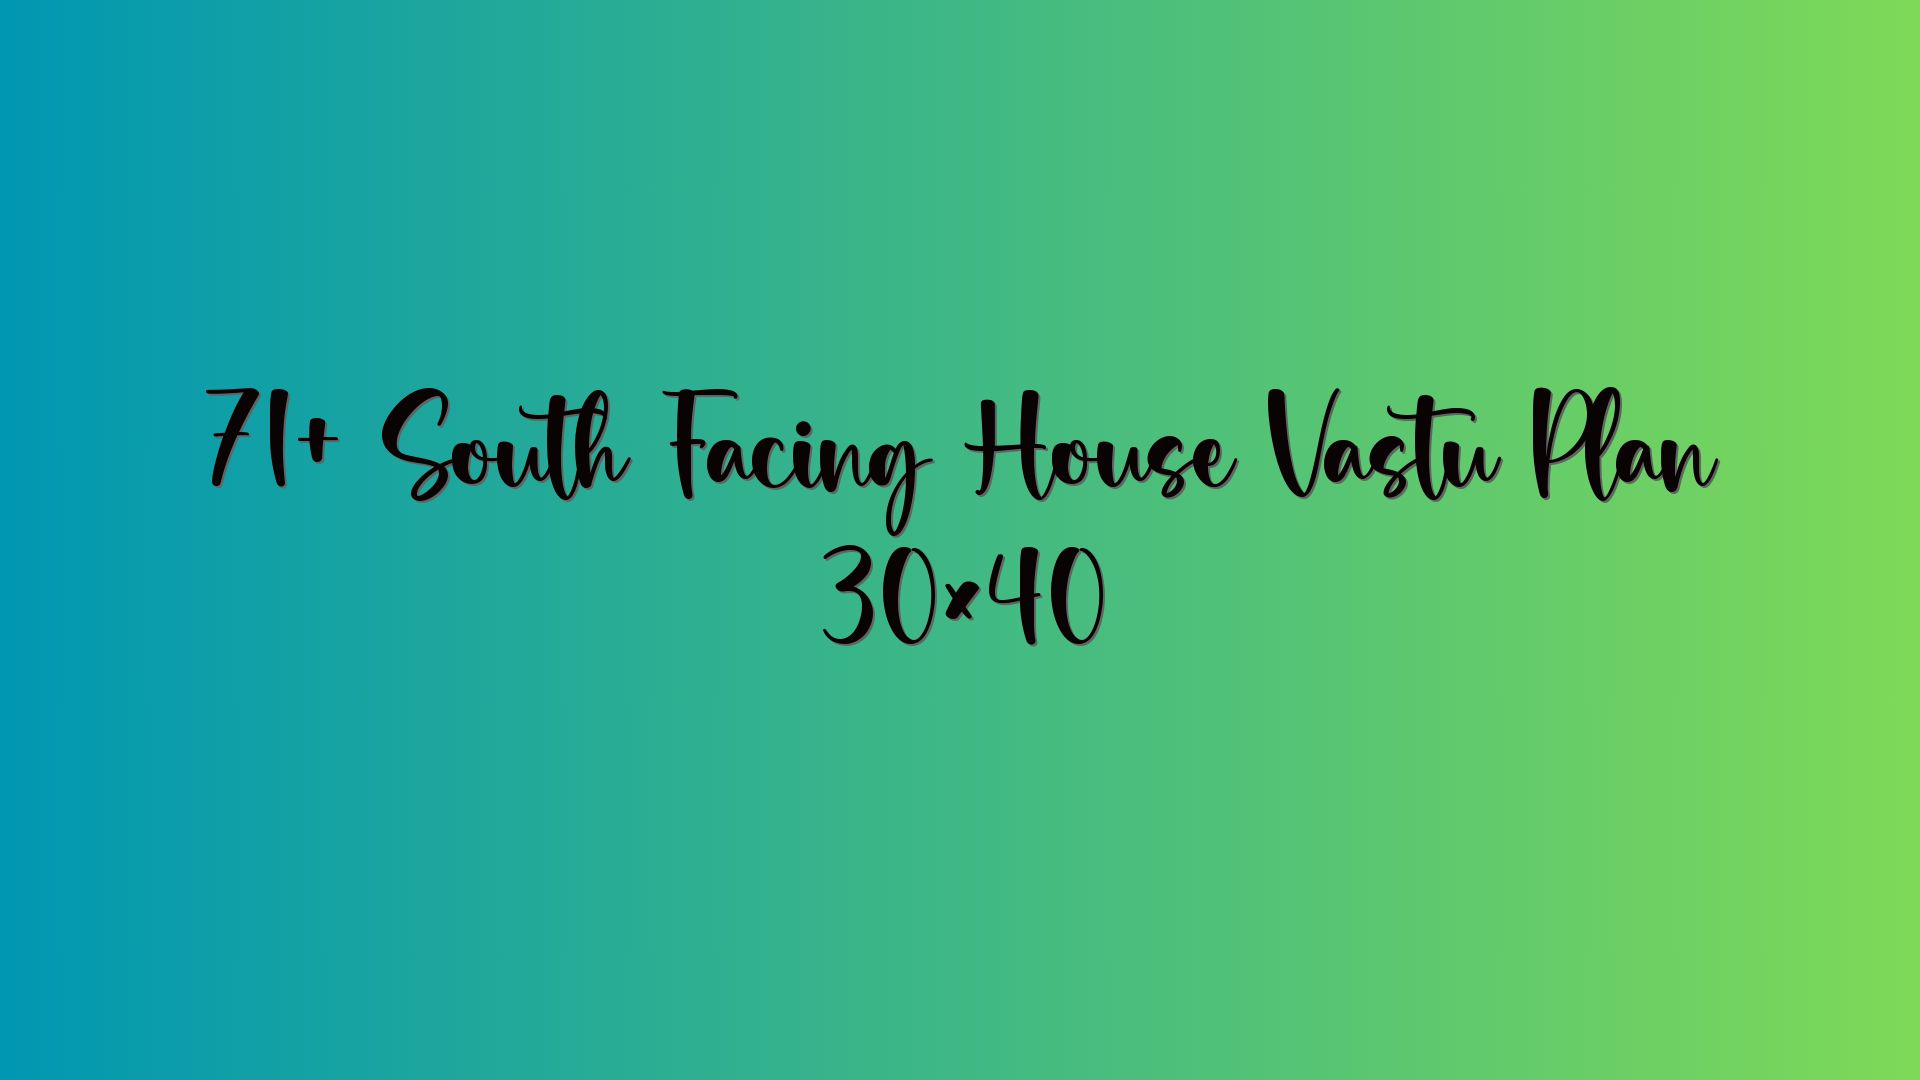 71+ South Facing House Vastu Plan 30×40